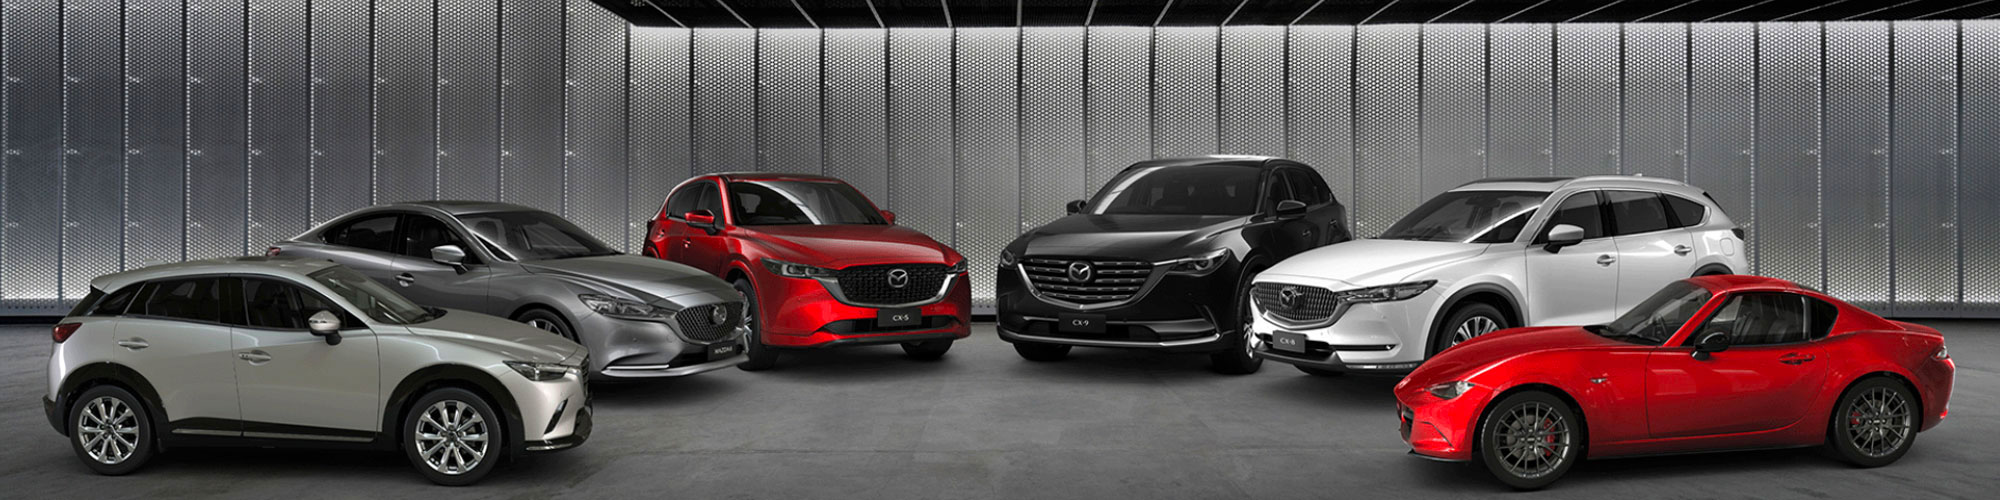 Mazda Corporate Select